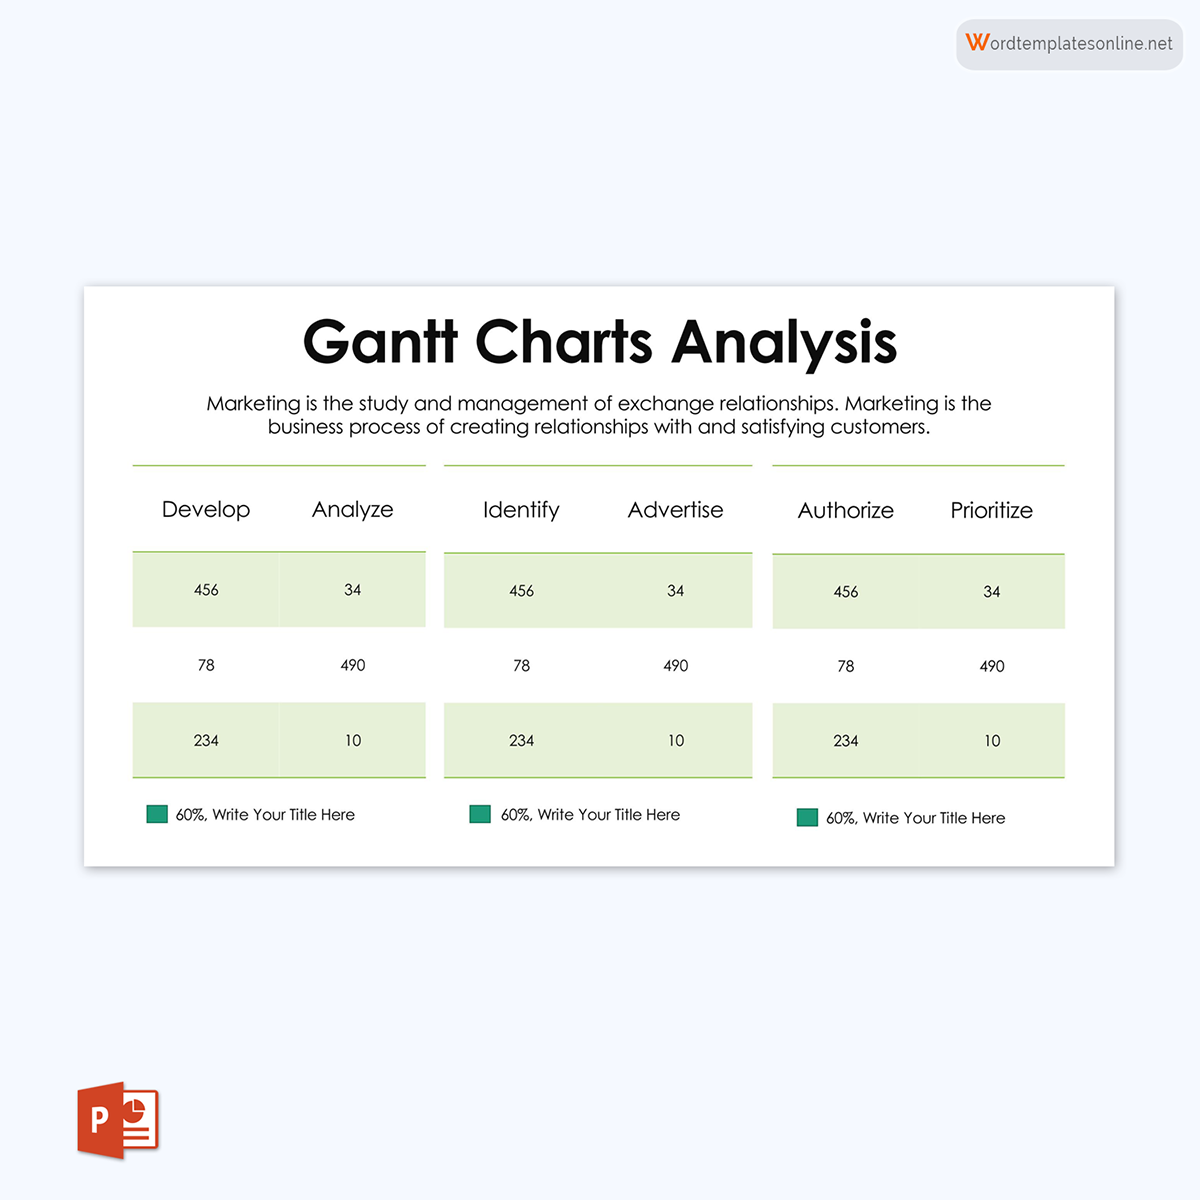 Professional Editable Gantt Chart Analysis Template 01 as PowerPoint Slides